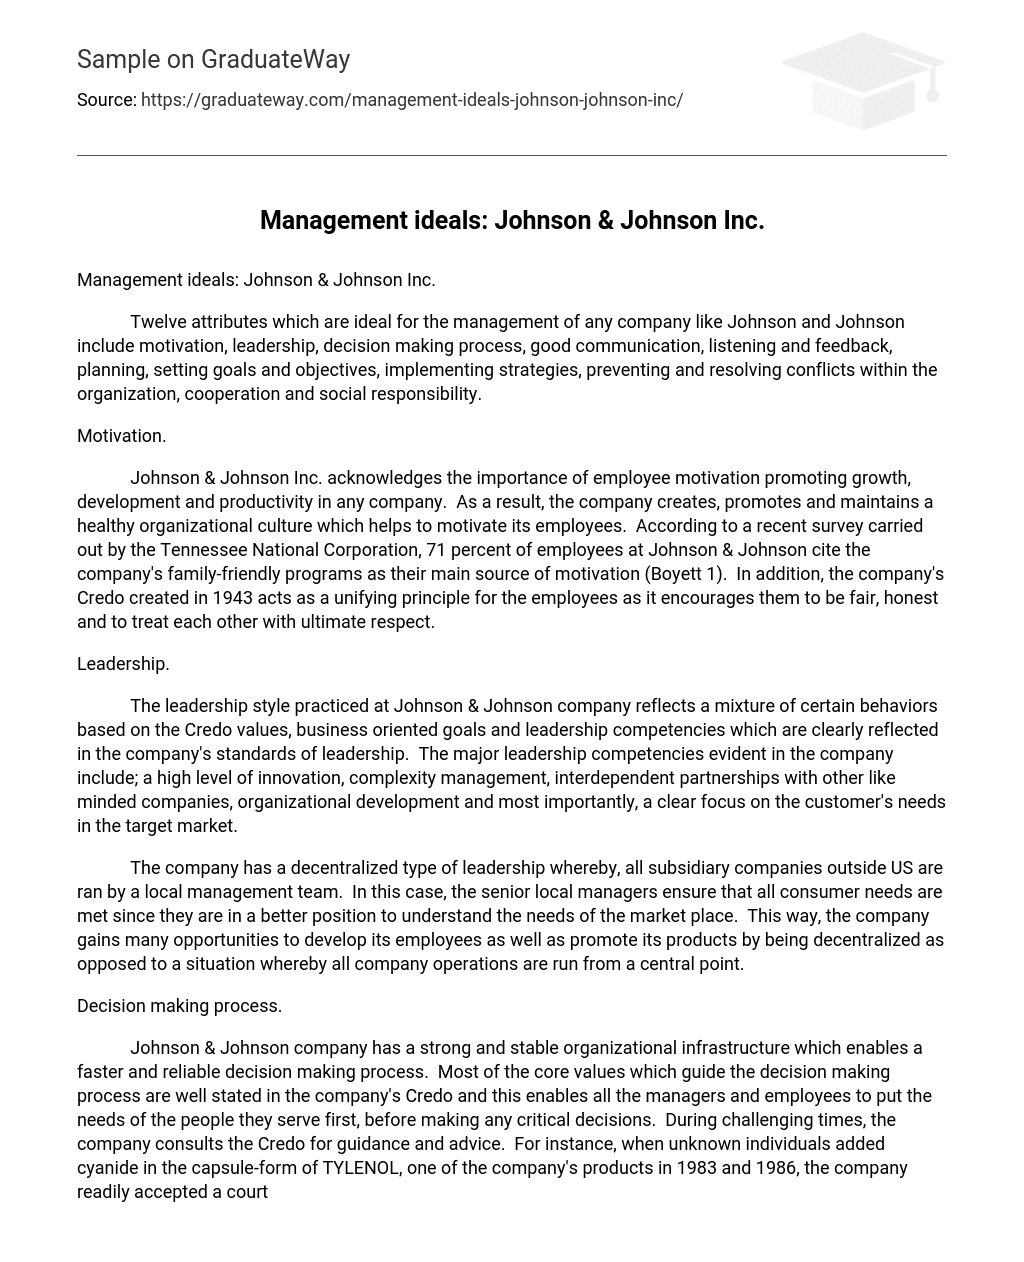 Management ideals: Johnson & Johnson Inc.